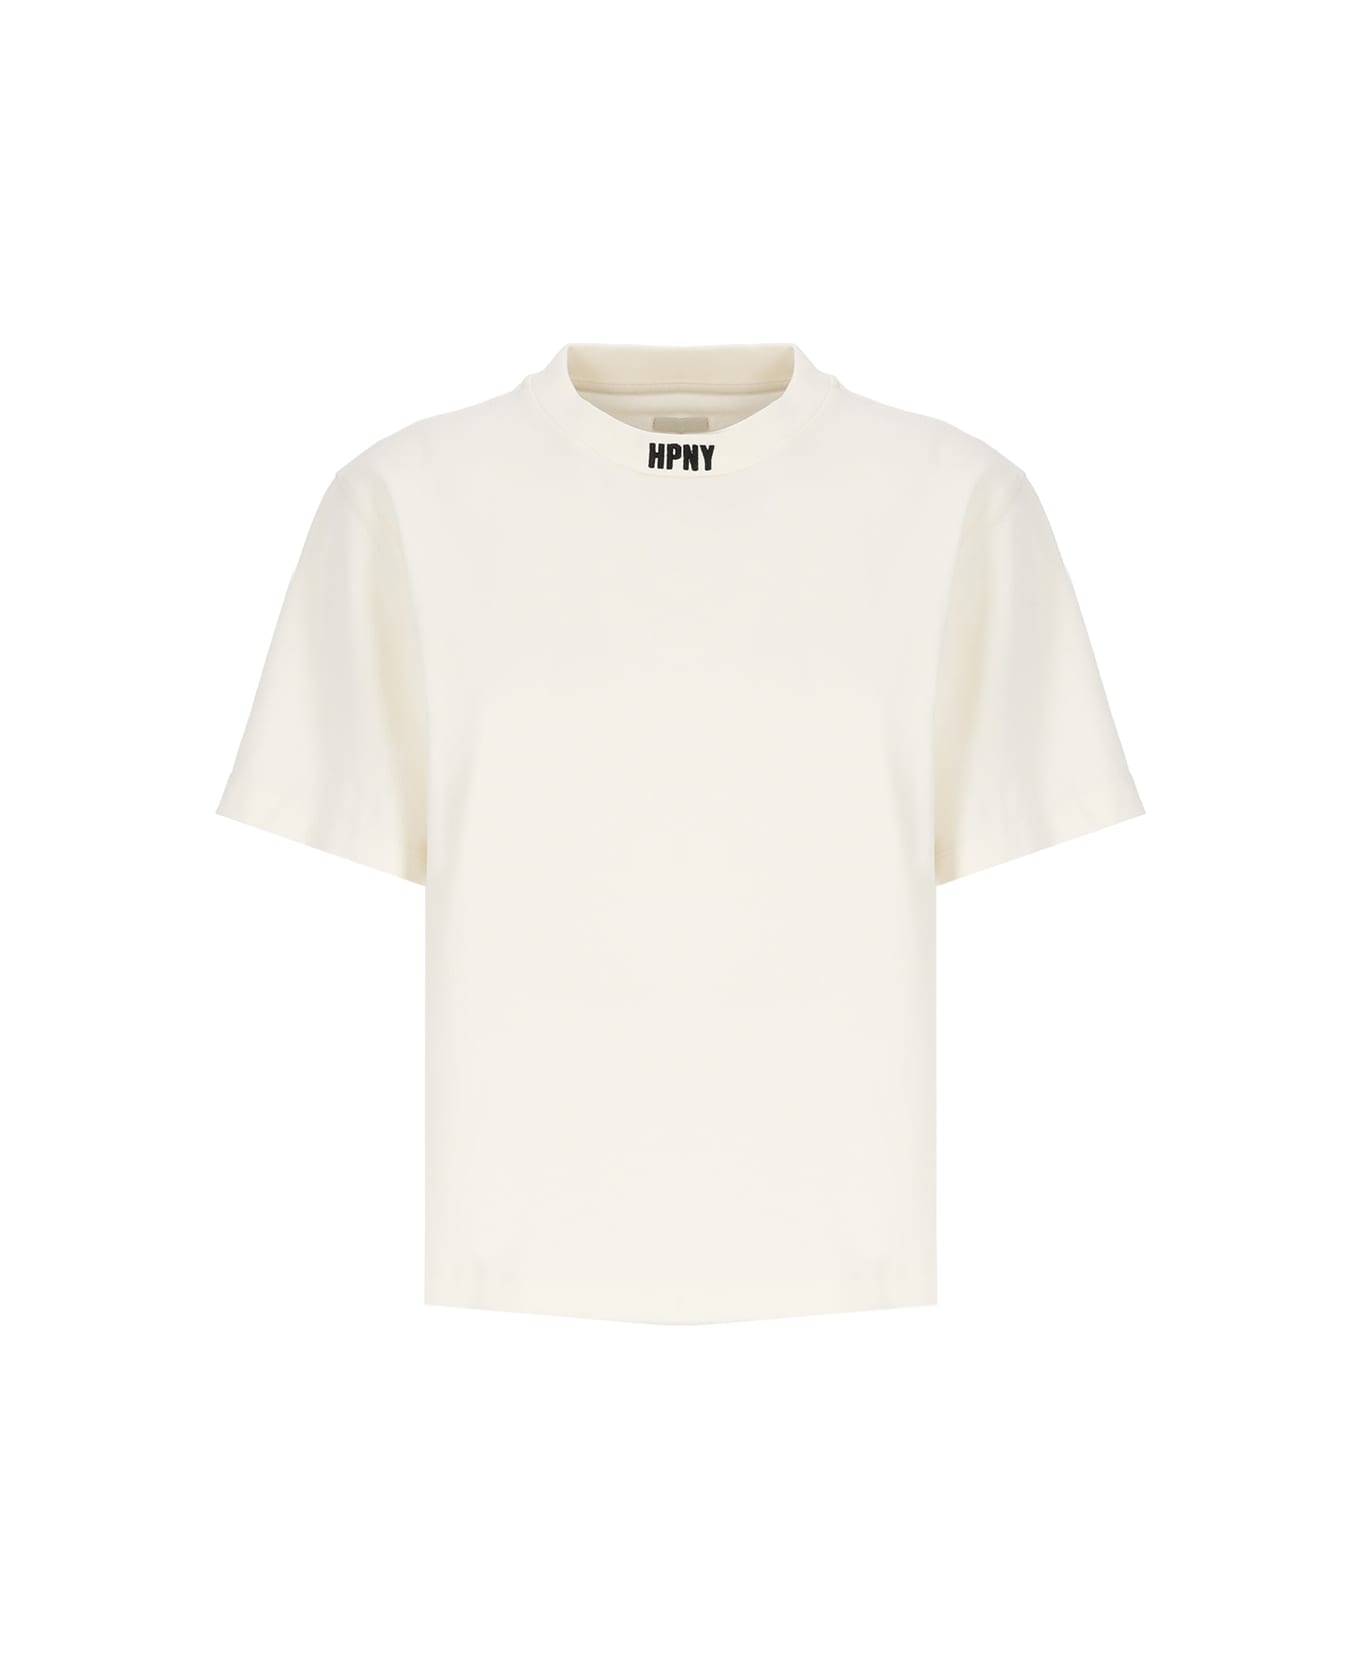 HERON PRESTON Hpny T-shirt - White Black